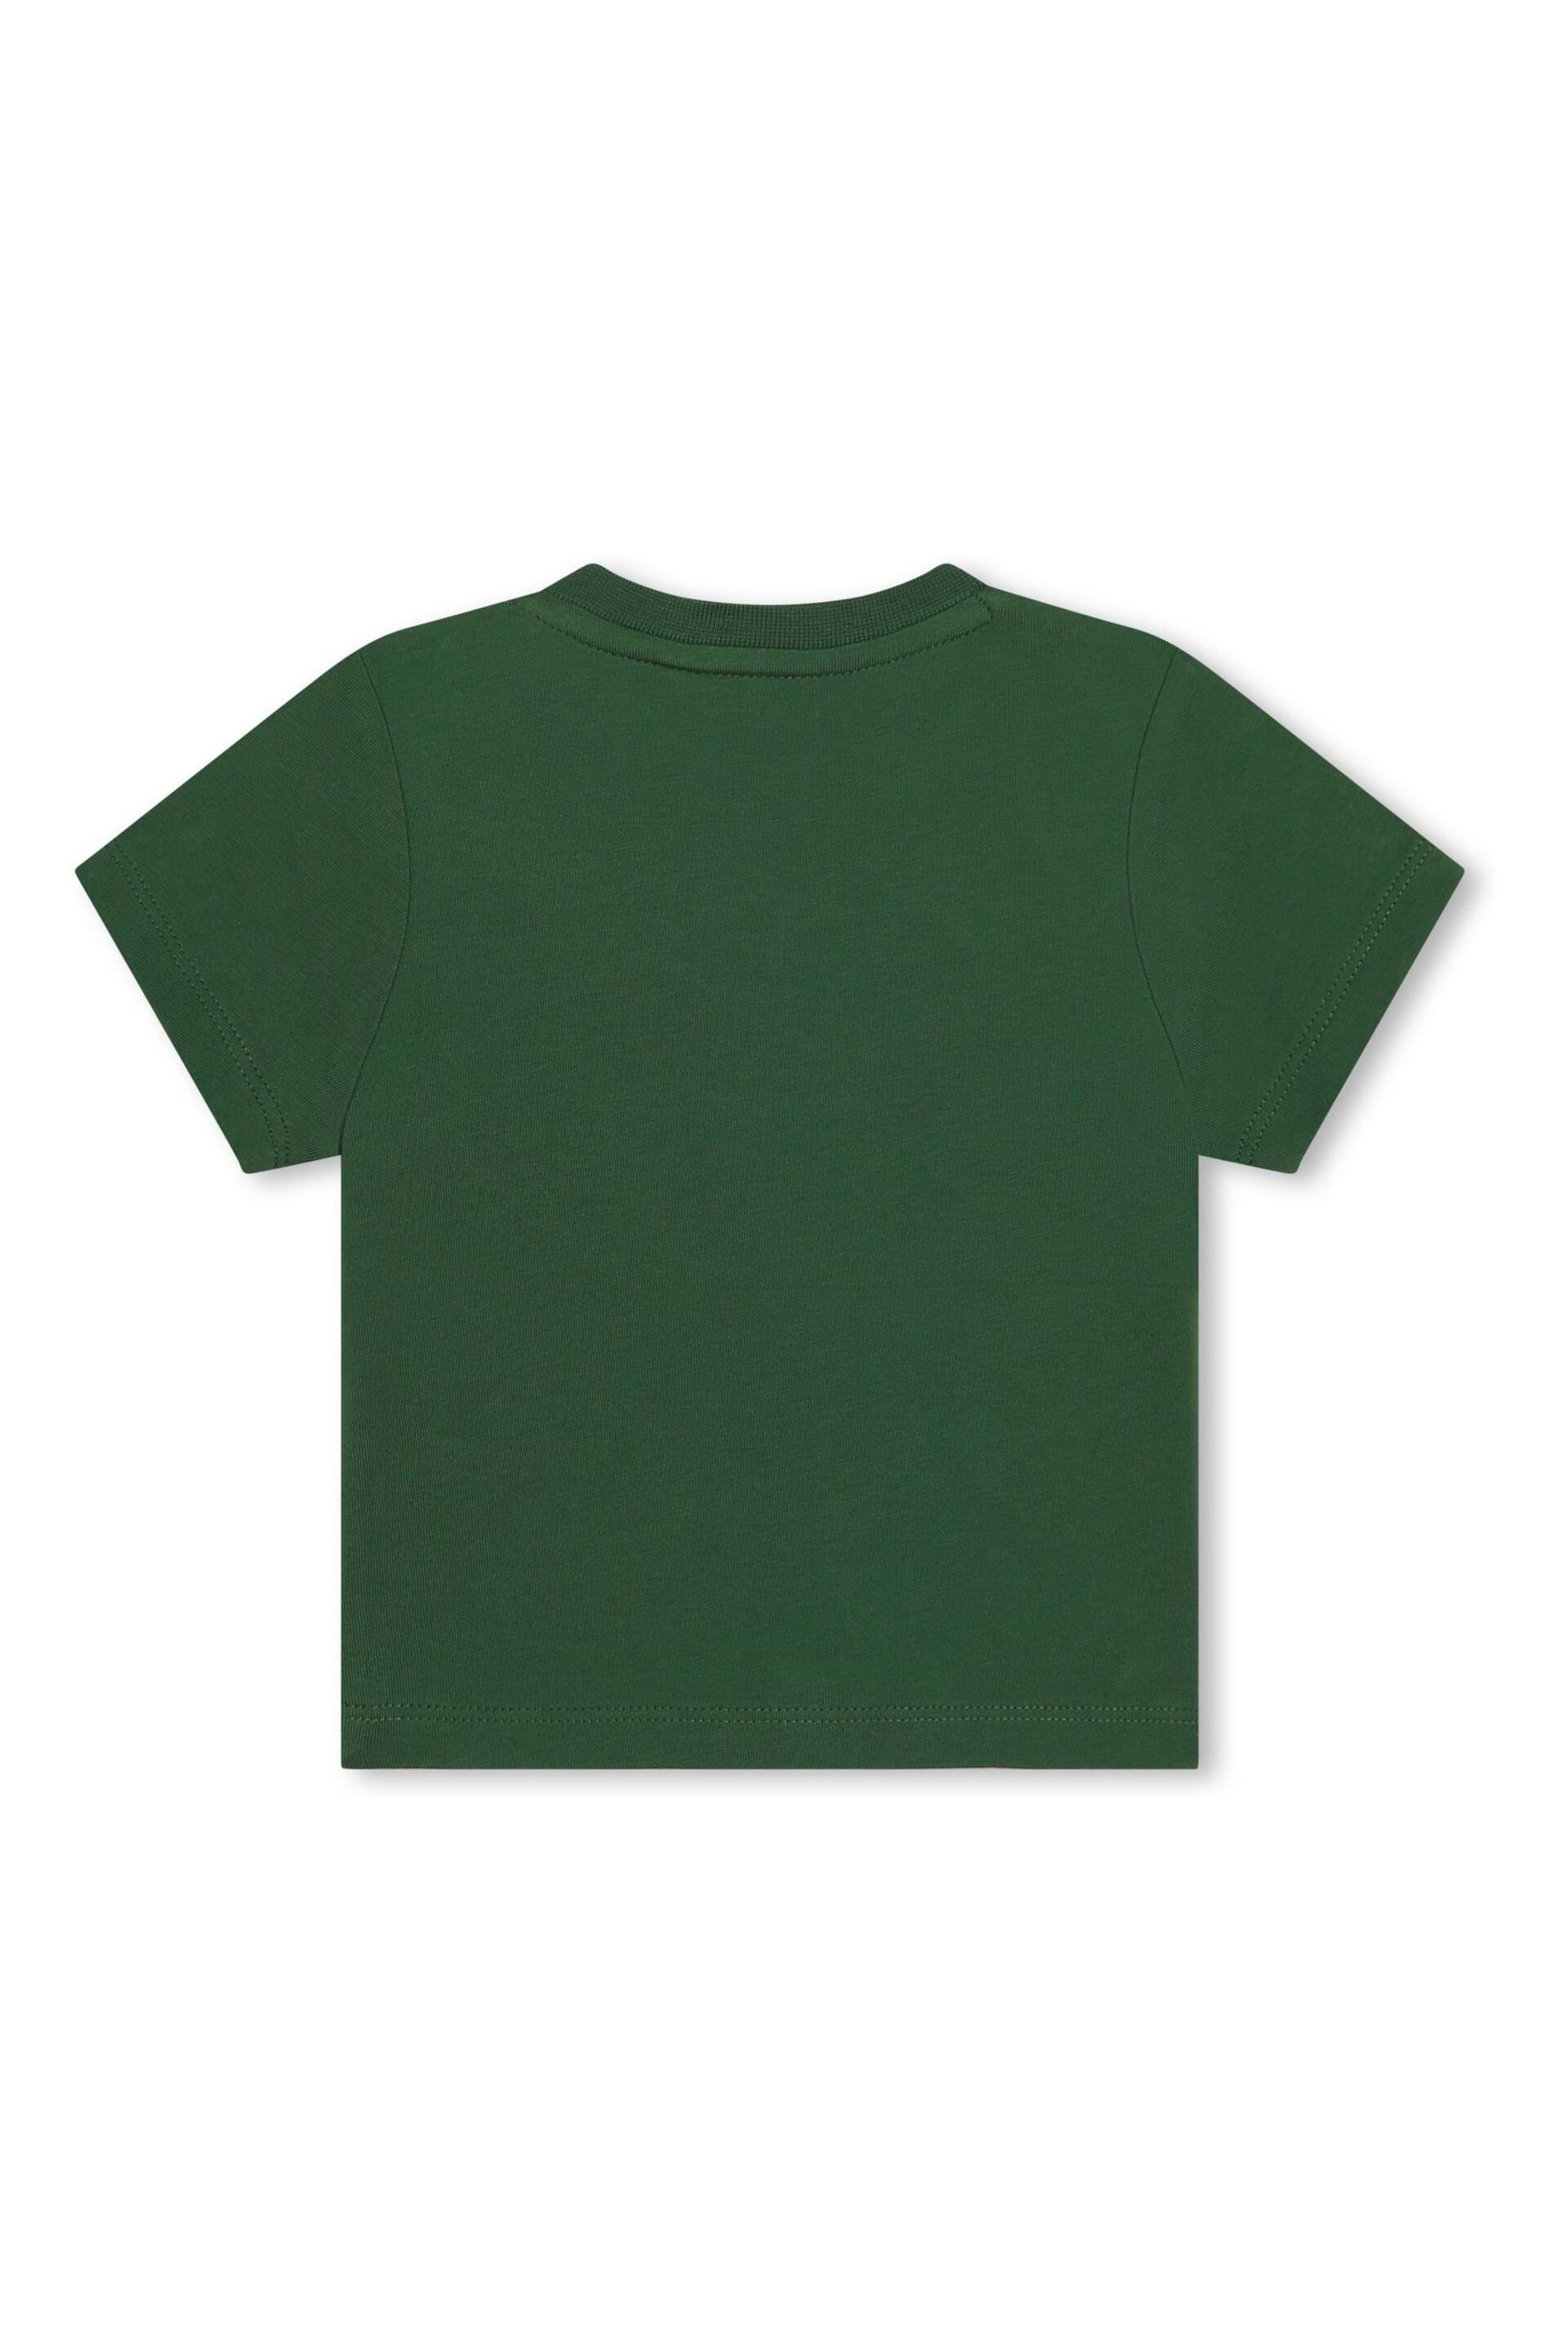 BOSS Green Short Sleeved Logo T-Shirt - Image 2 of 3